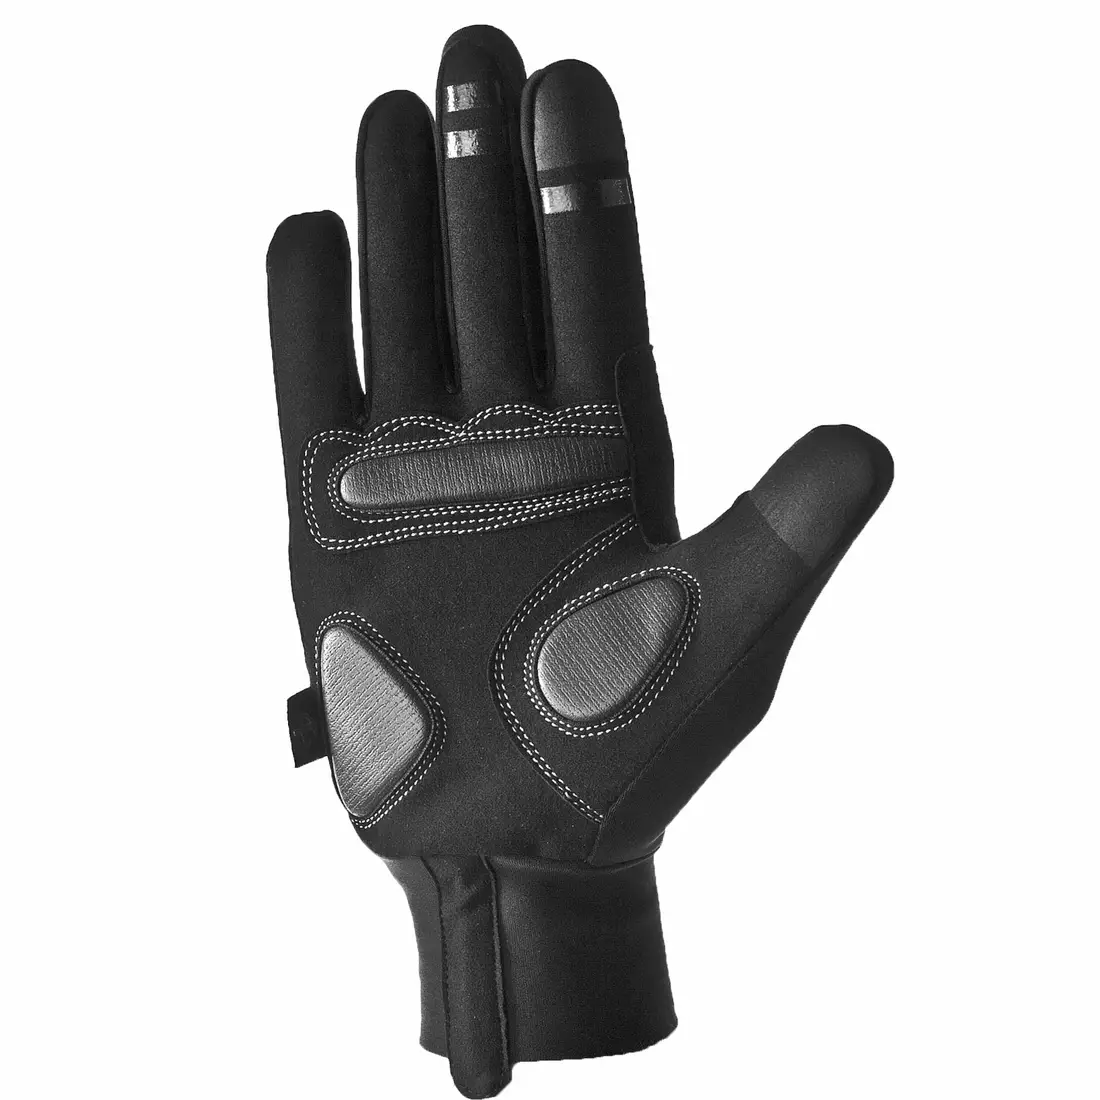 DEKO GLA-001 autumn bicycle gloves Gel black